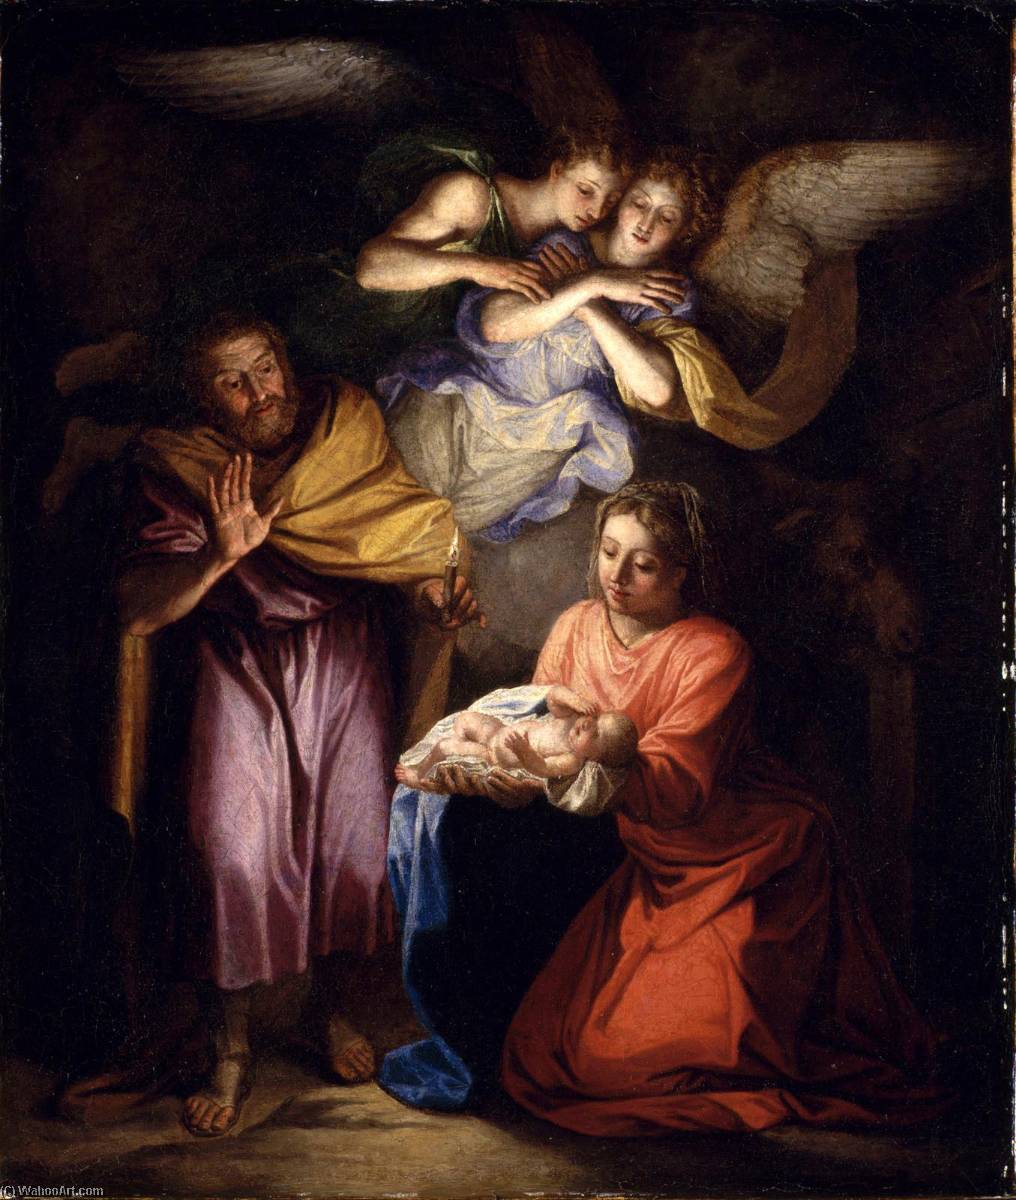 Acheter Reproductions D'art De Musée La Nativité (étude) de Noel Nicolas Coypel (1628-1707, France) | ArtsDot.com